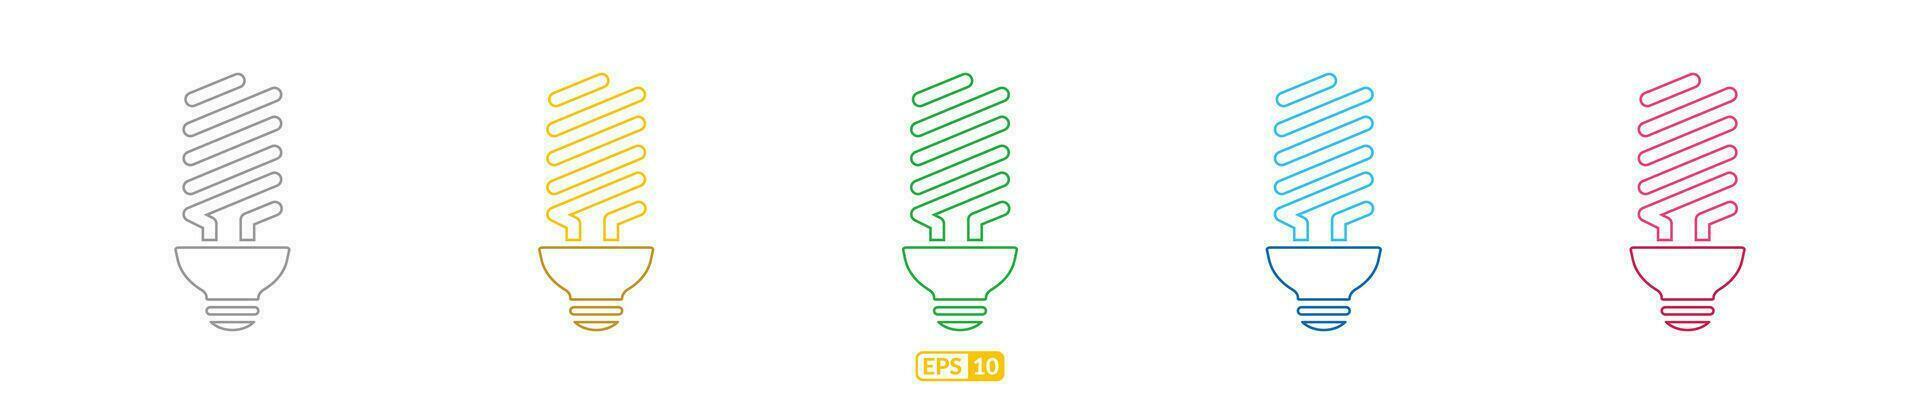 LED bulbo vistoso línea icono colocar. vector